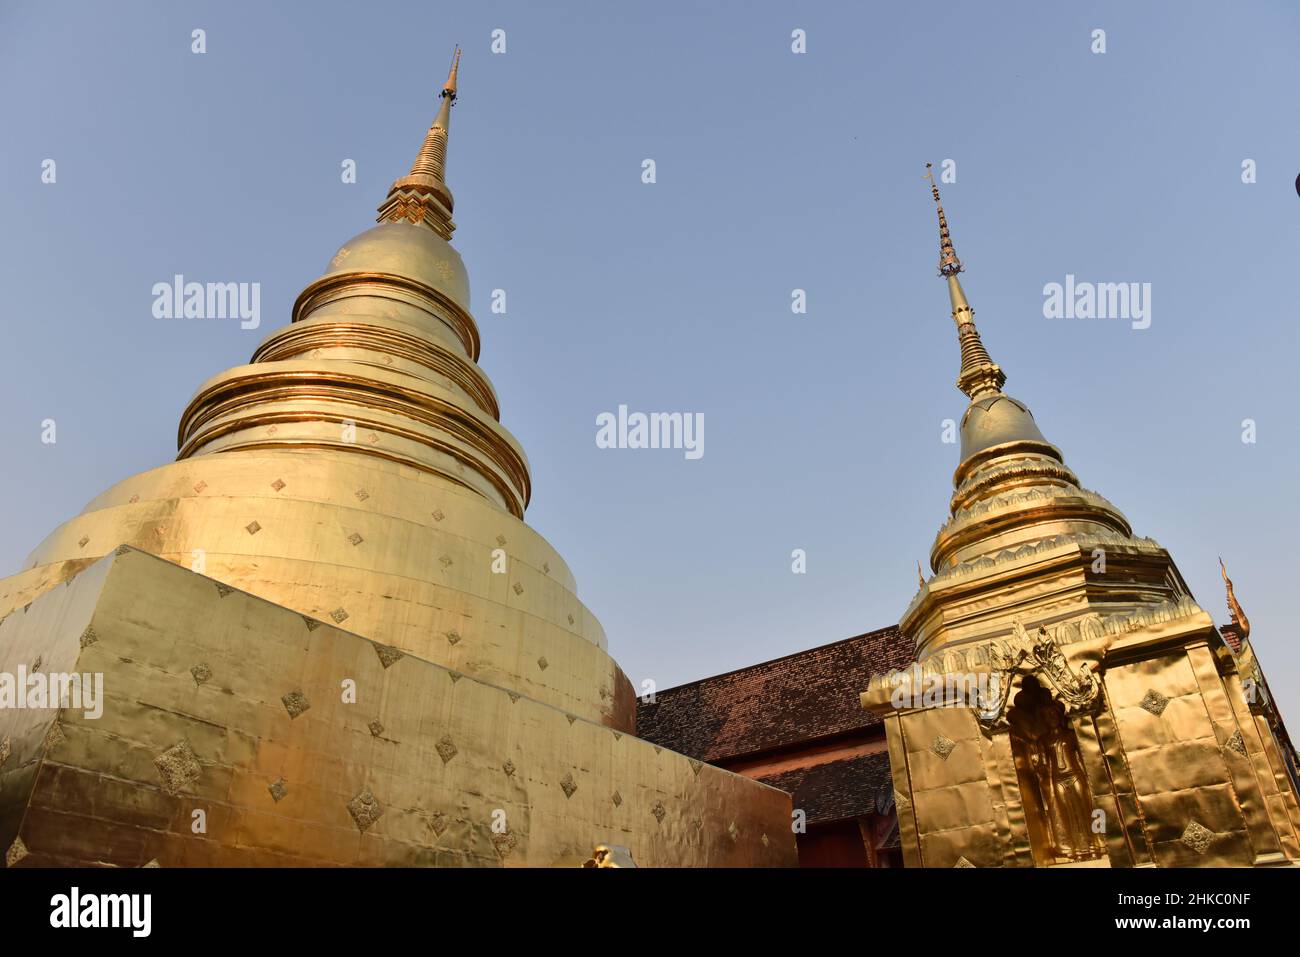 Wat Phra Singh Buddhist temple complex, Chiang Mai, Thailand Stock Photo